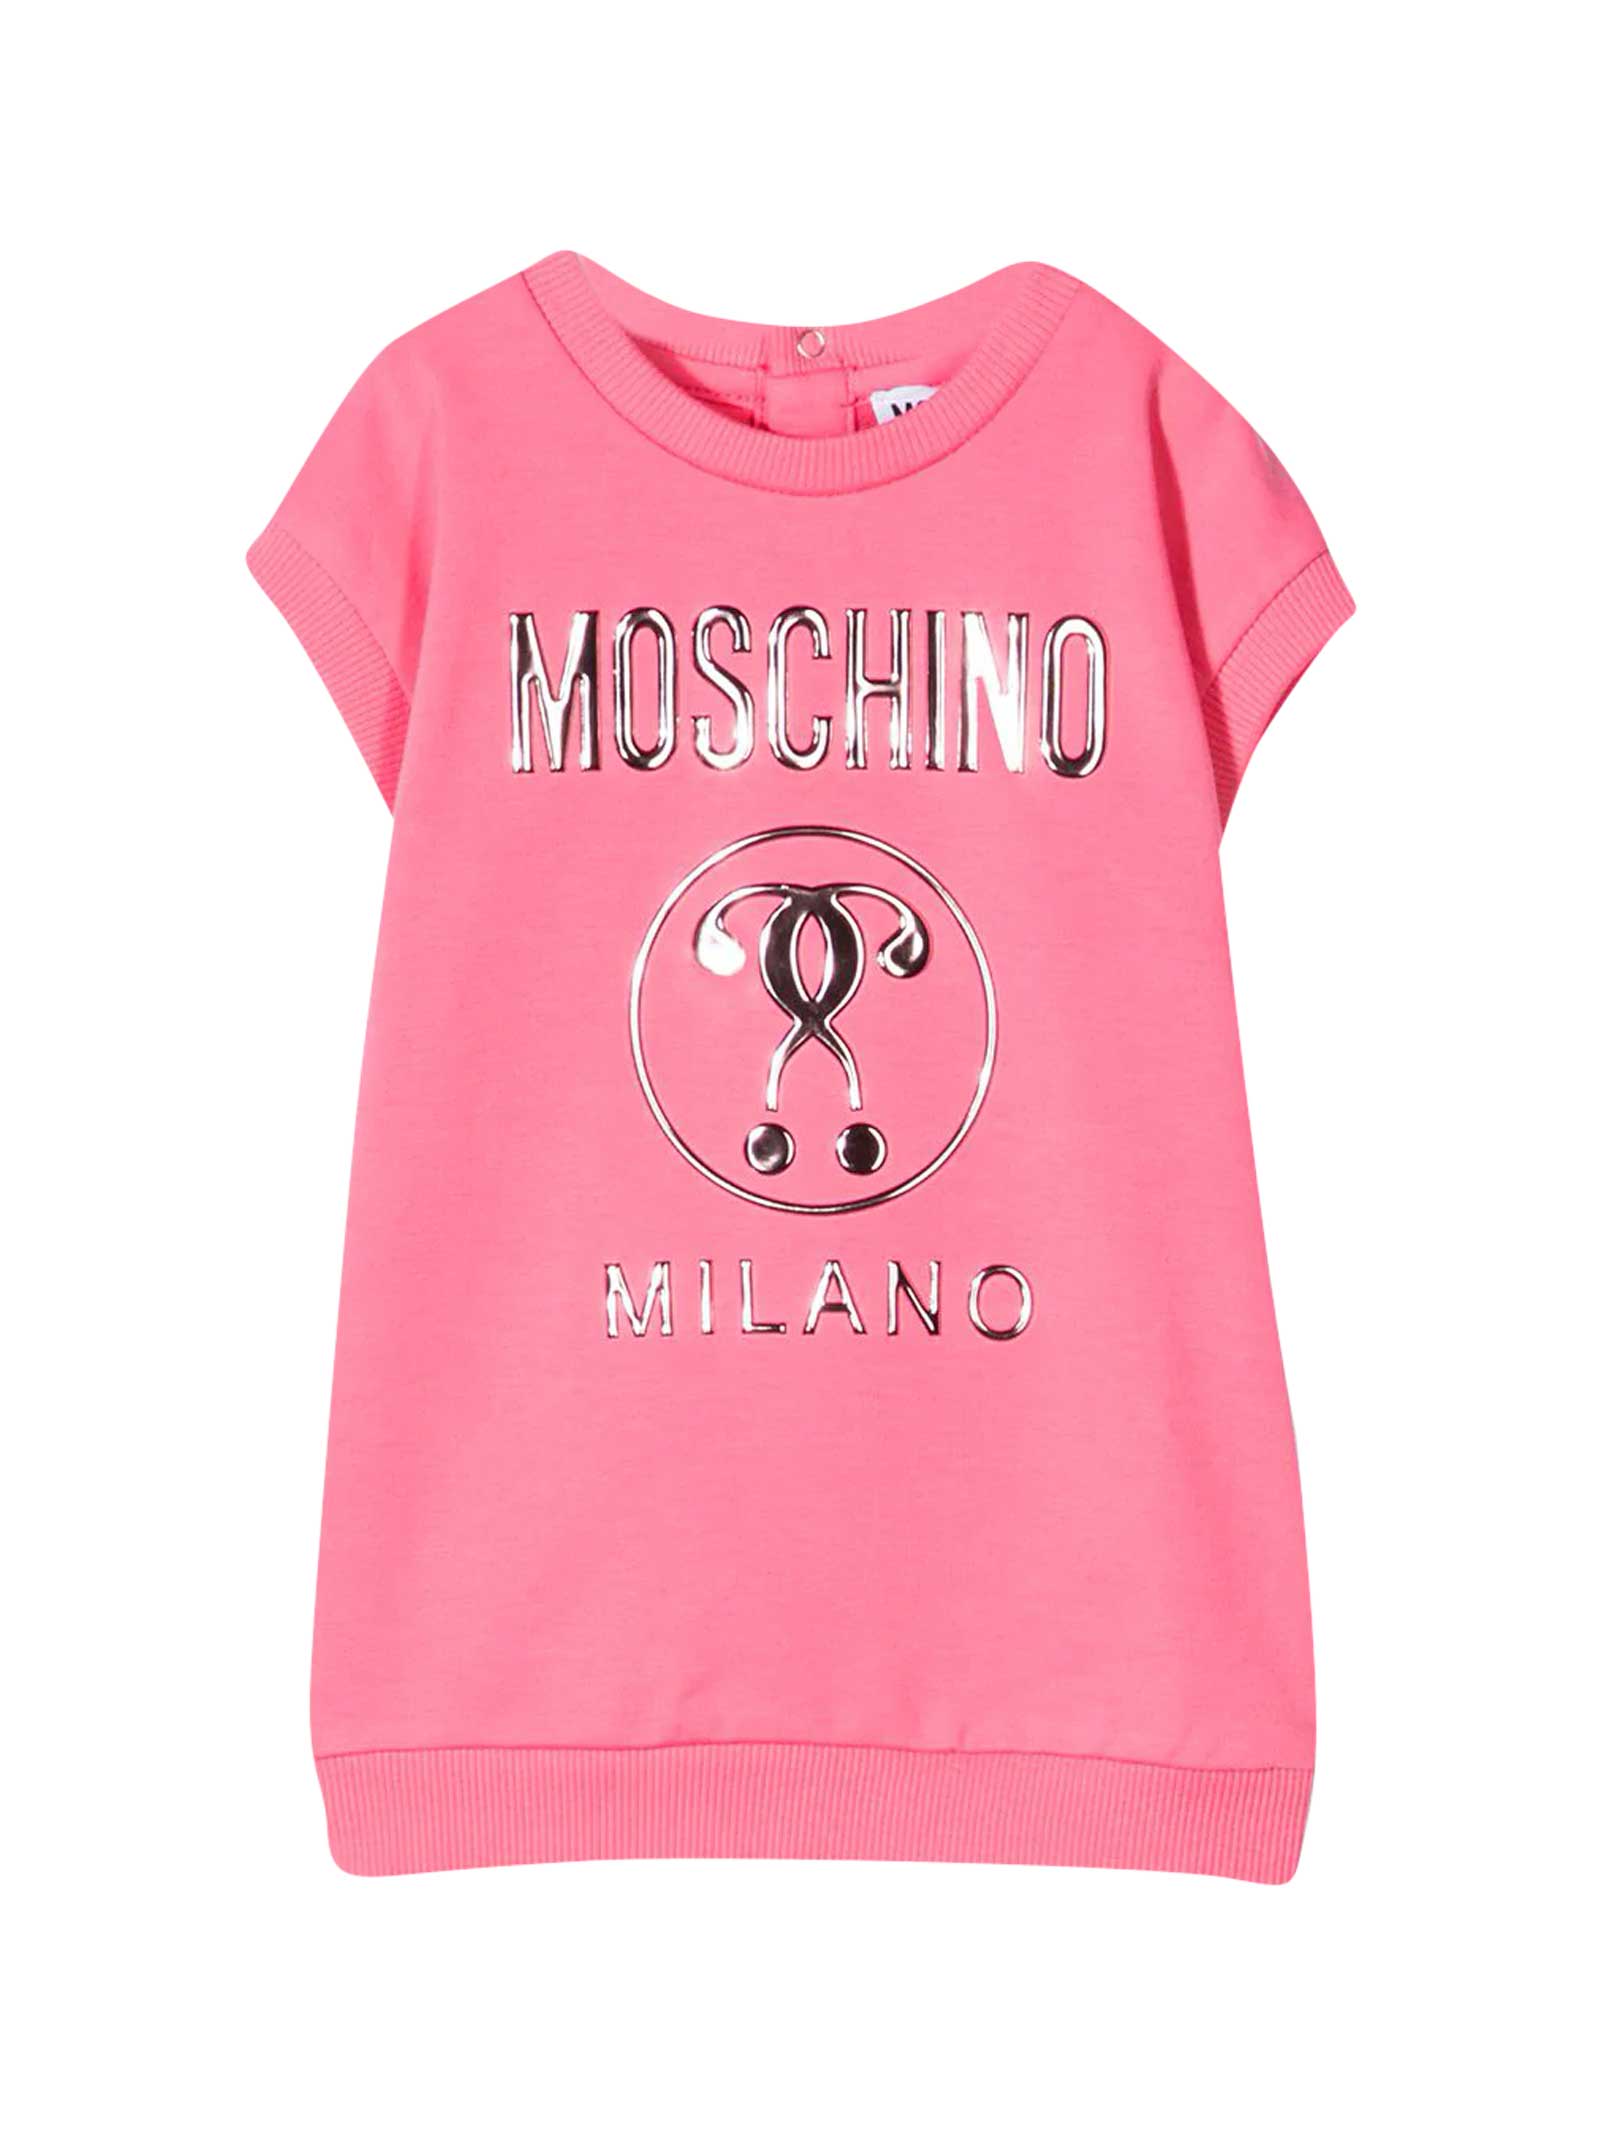 Moschino Pink T-shirt Dress